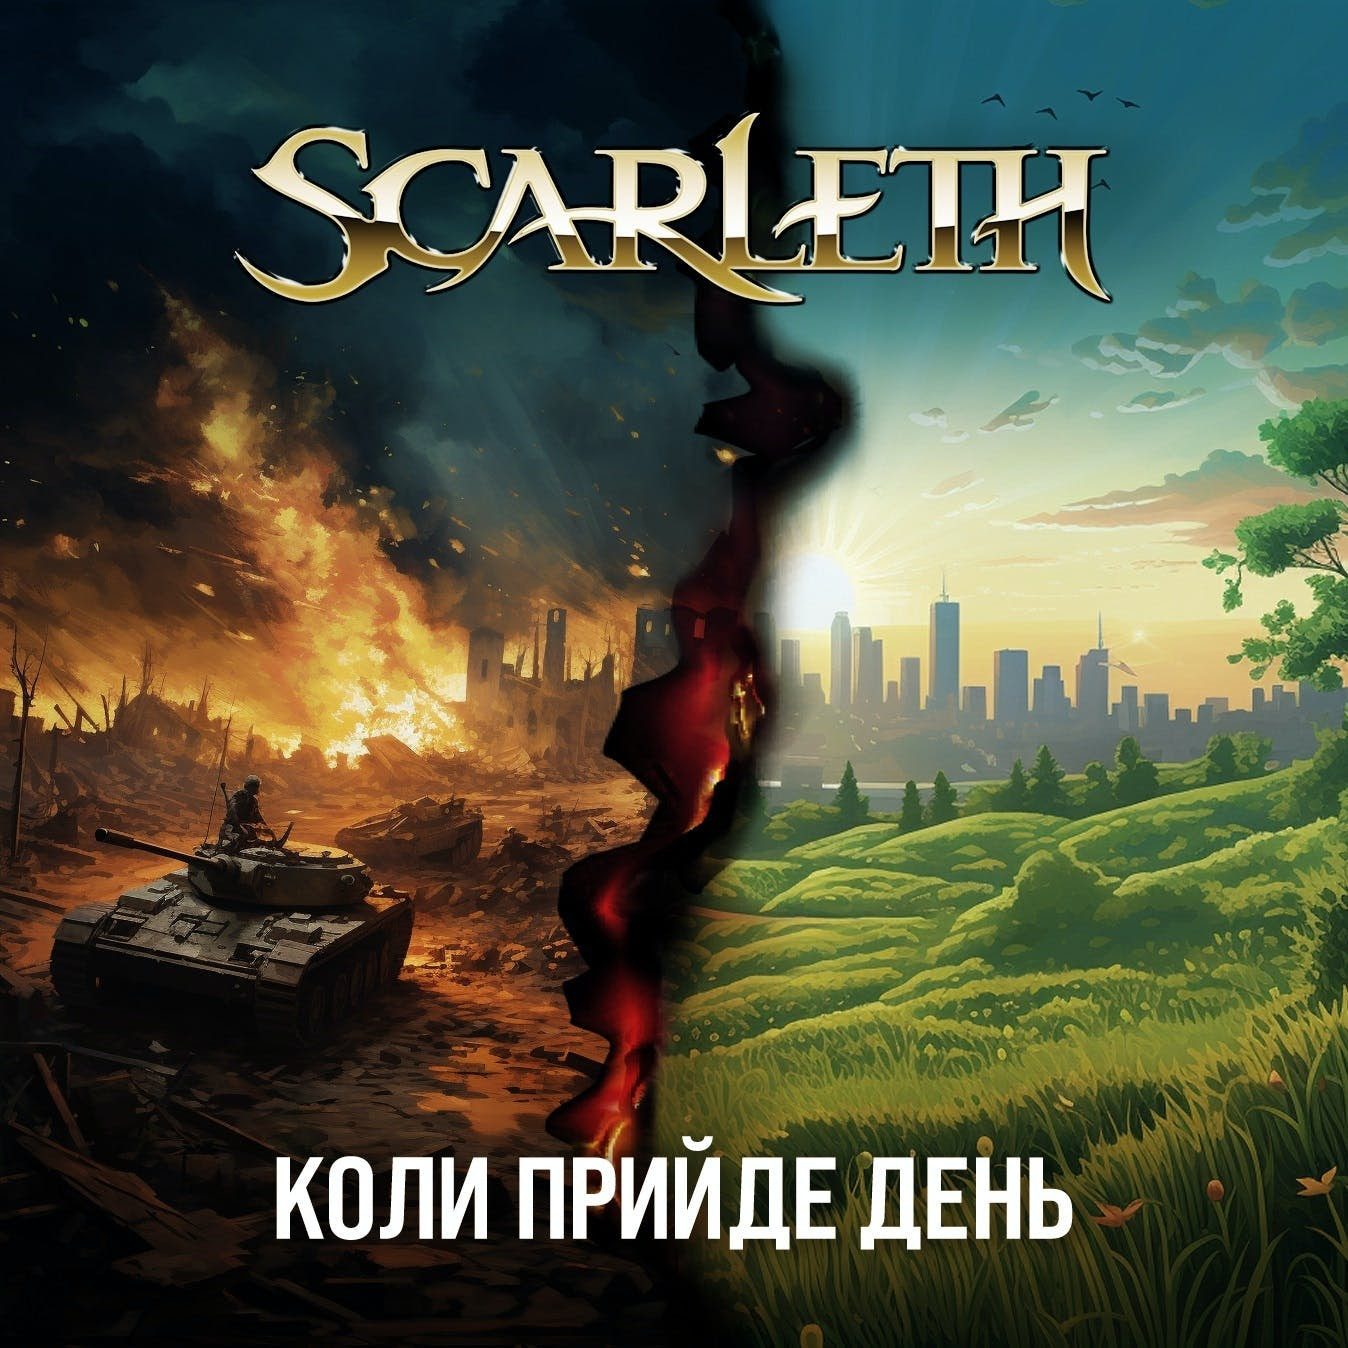 WATCH: “Коли Прийде День”by Scarleth